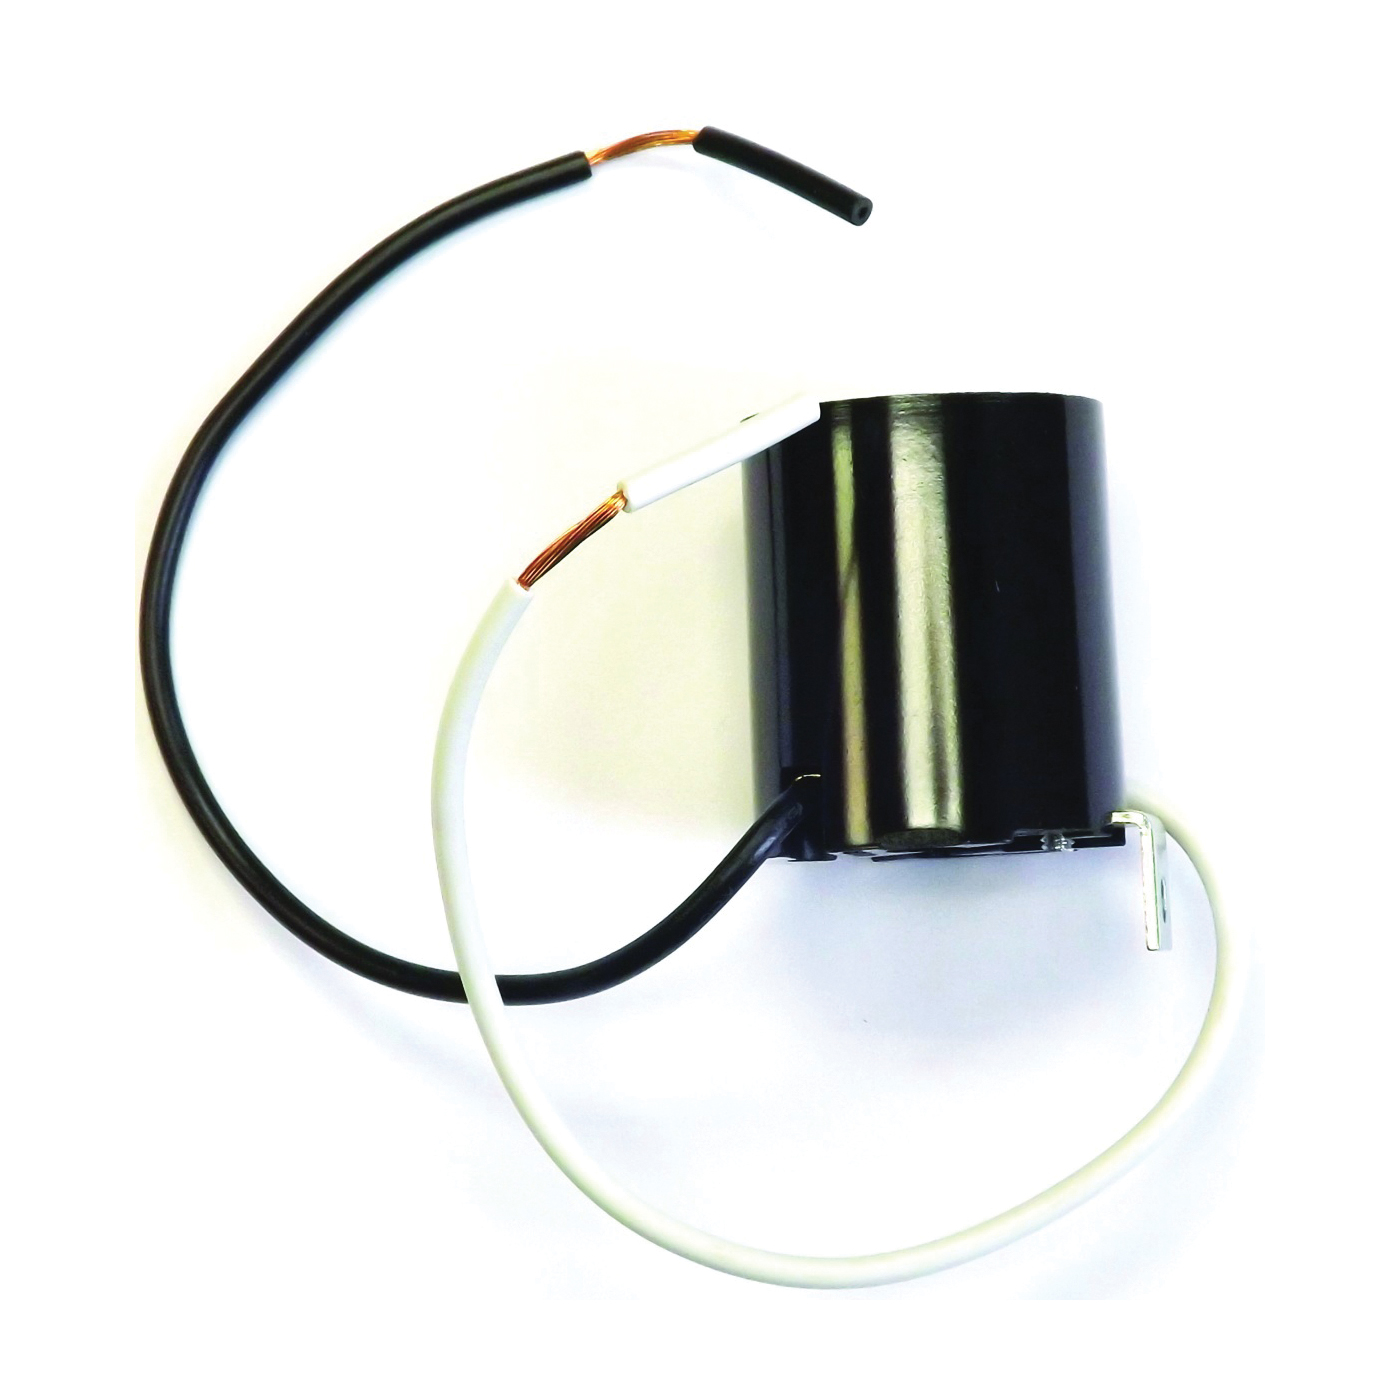 60537 Lamp Socket, 250 V, 660 W, Phenolic Housing Material, Black